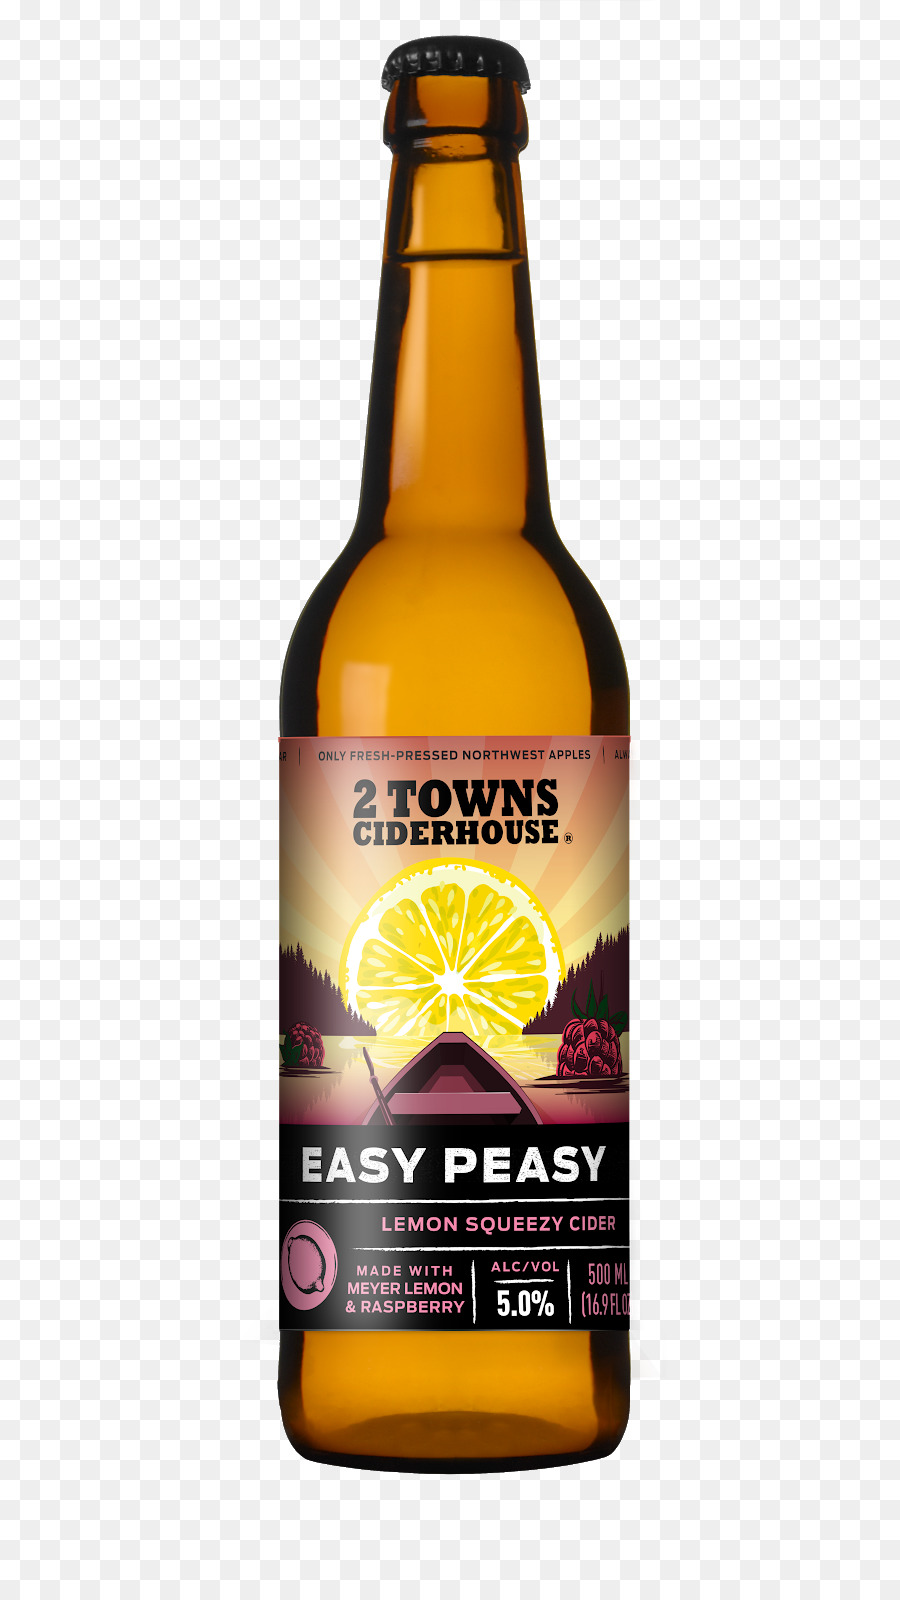 2 Städte Ciderhouse Bier Corvallis Perry - hausgemachte Zitronen